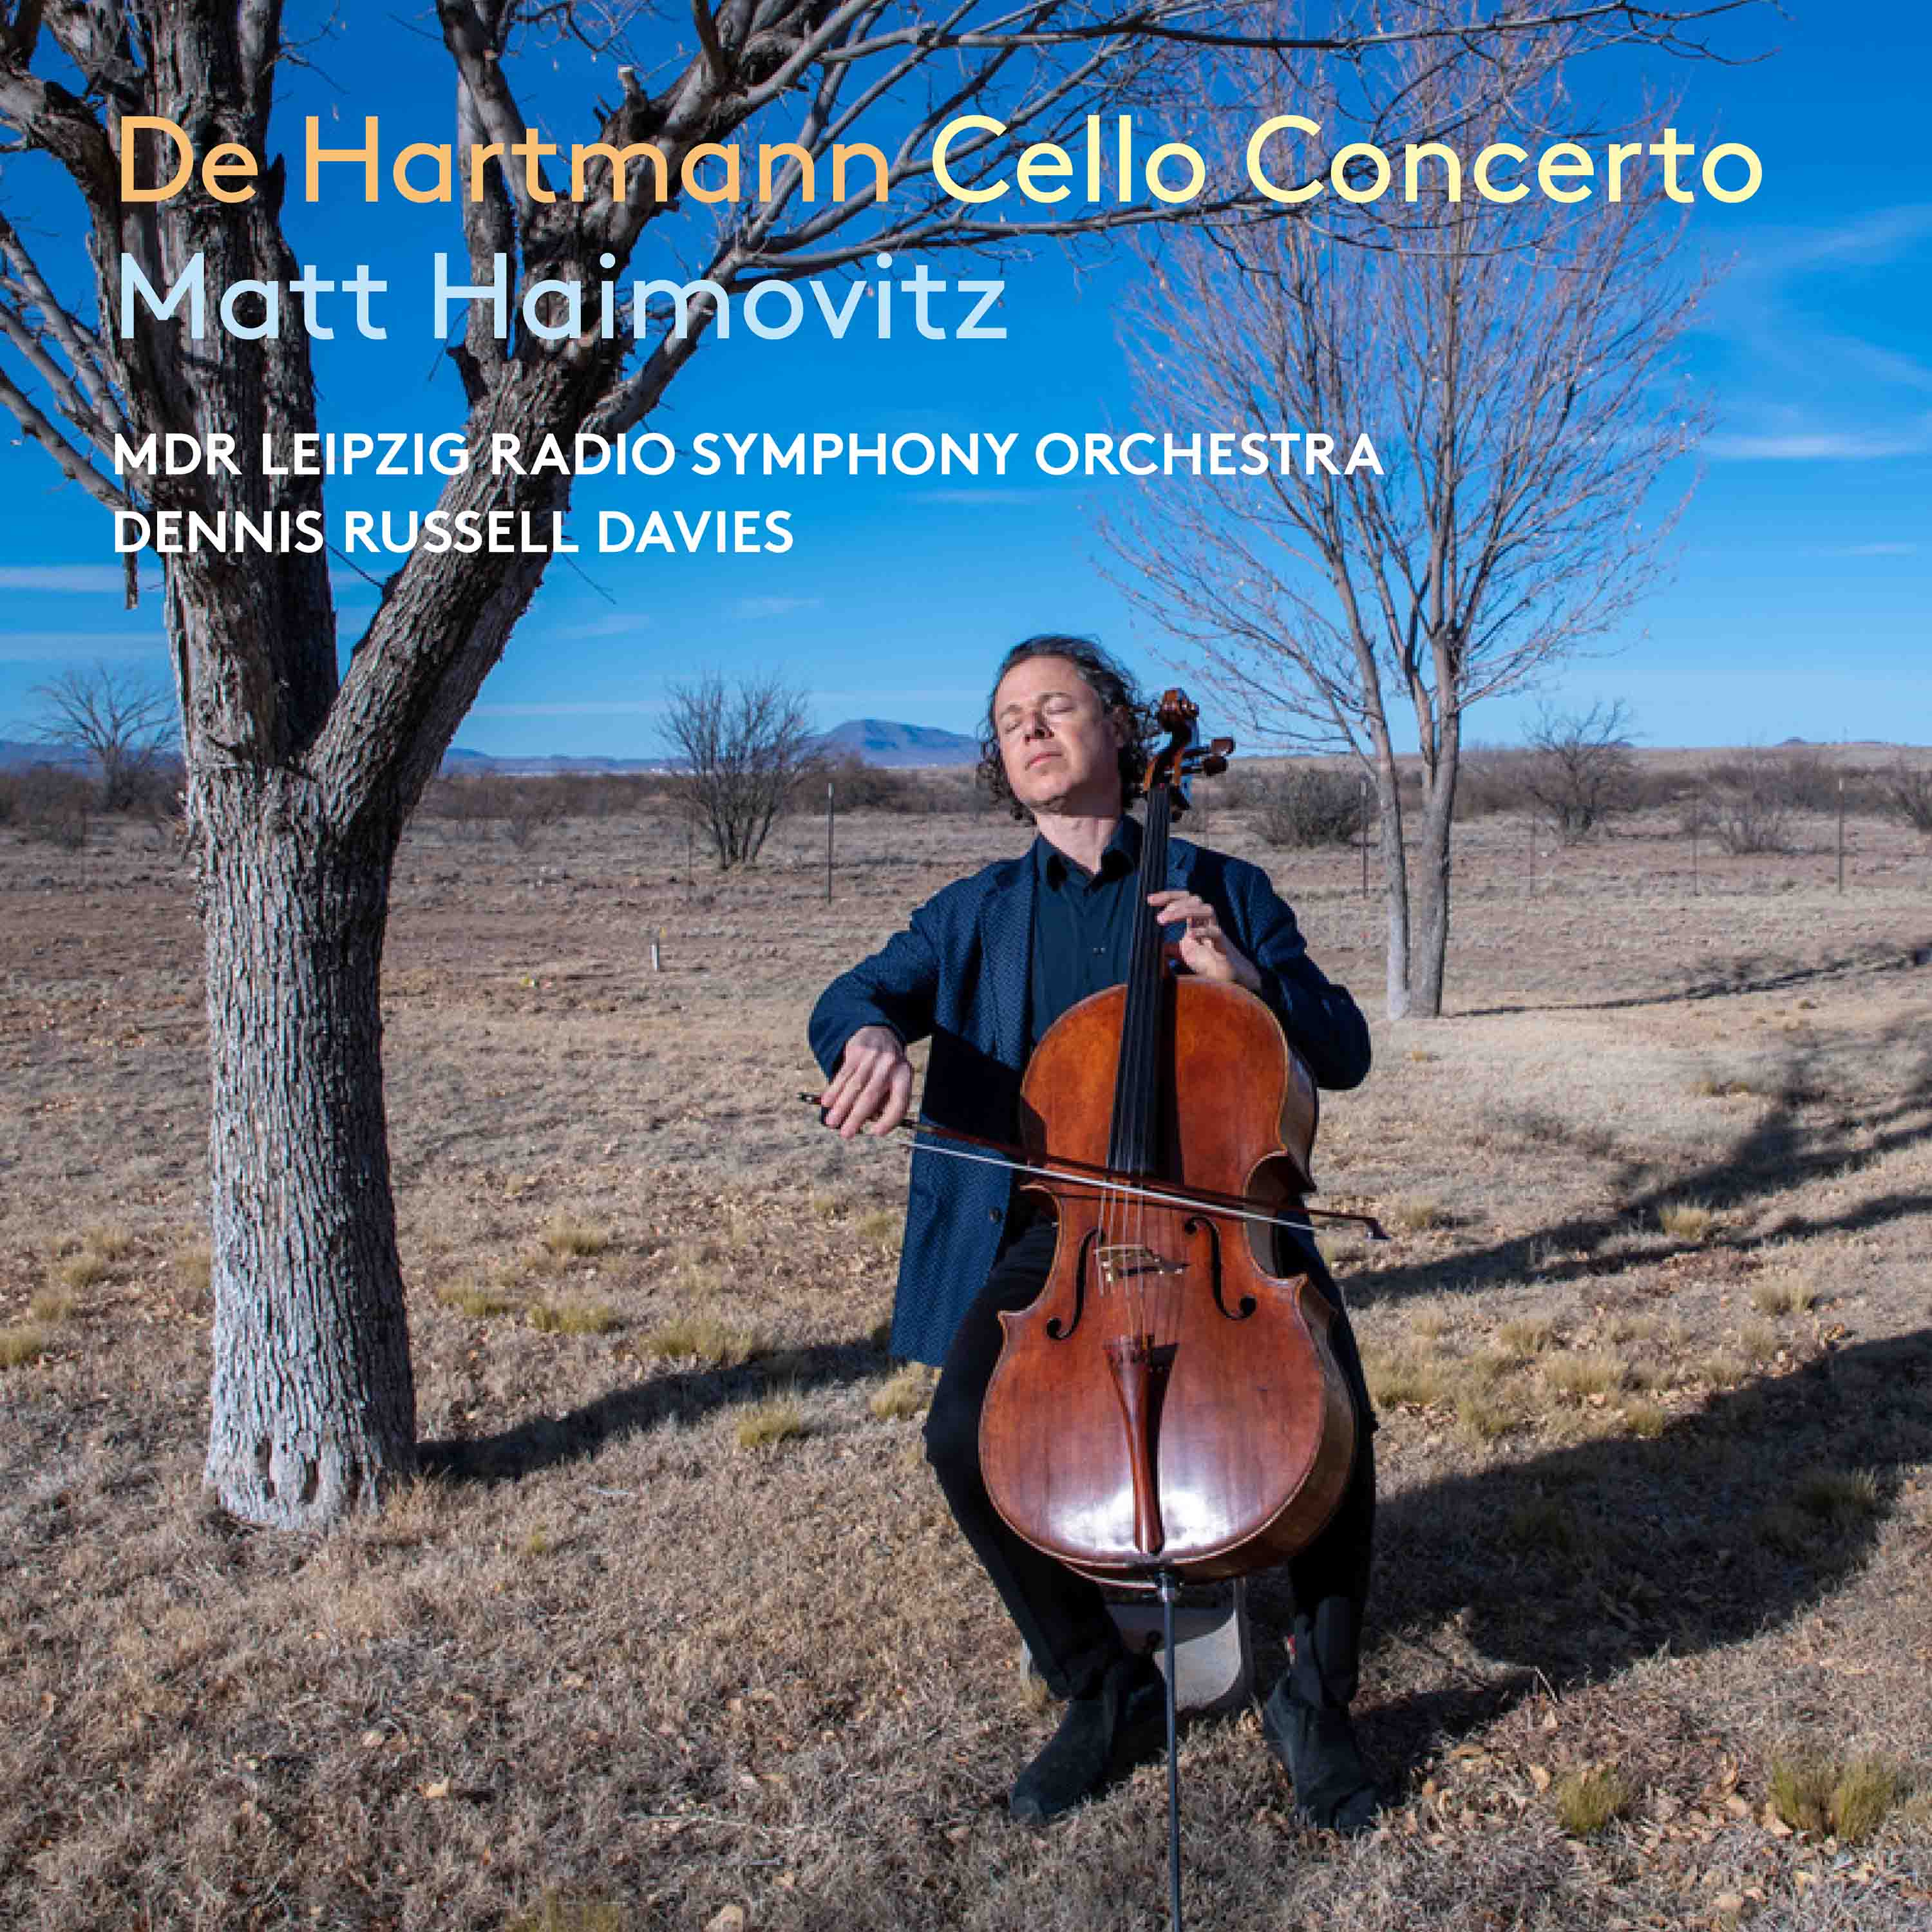 Ukrainian Gold: Cellist Matt Haimovitz records Thomas de Hartmann’s
Cello Concerto